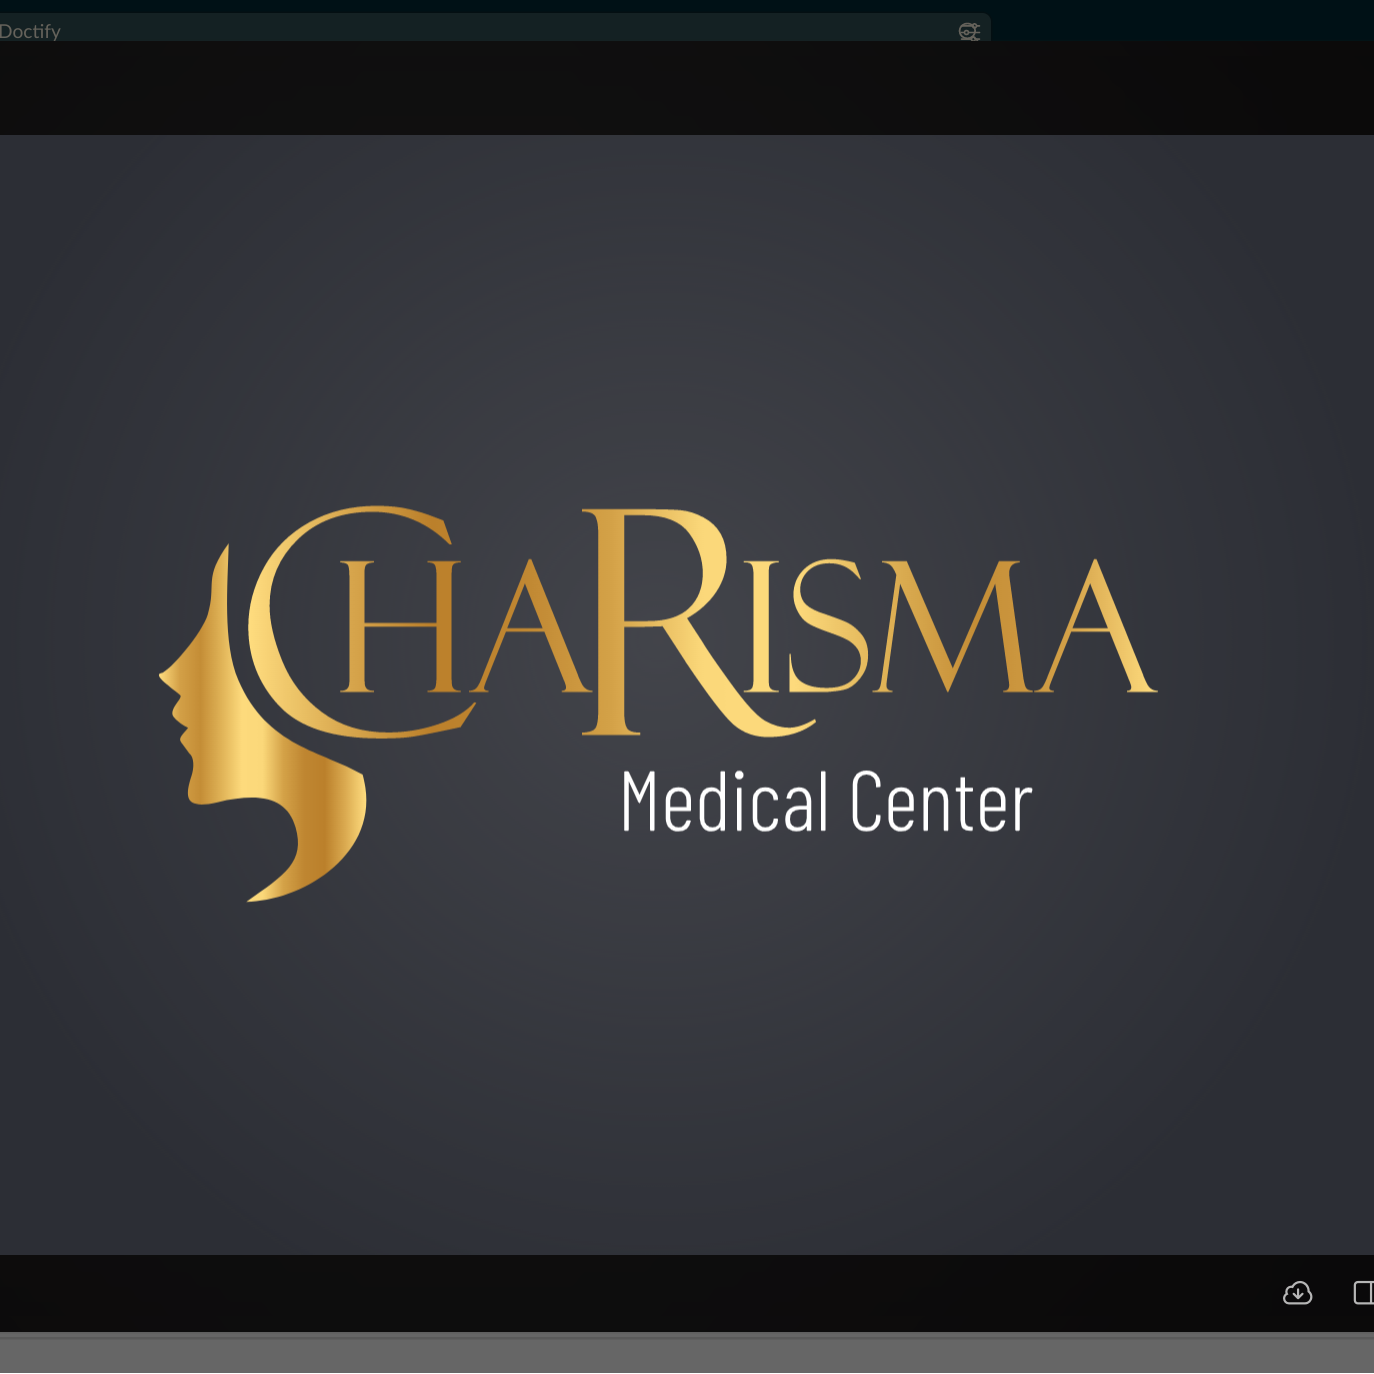 Charisma Medical Center